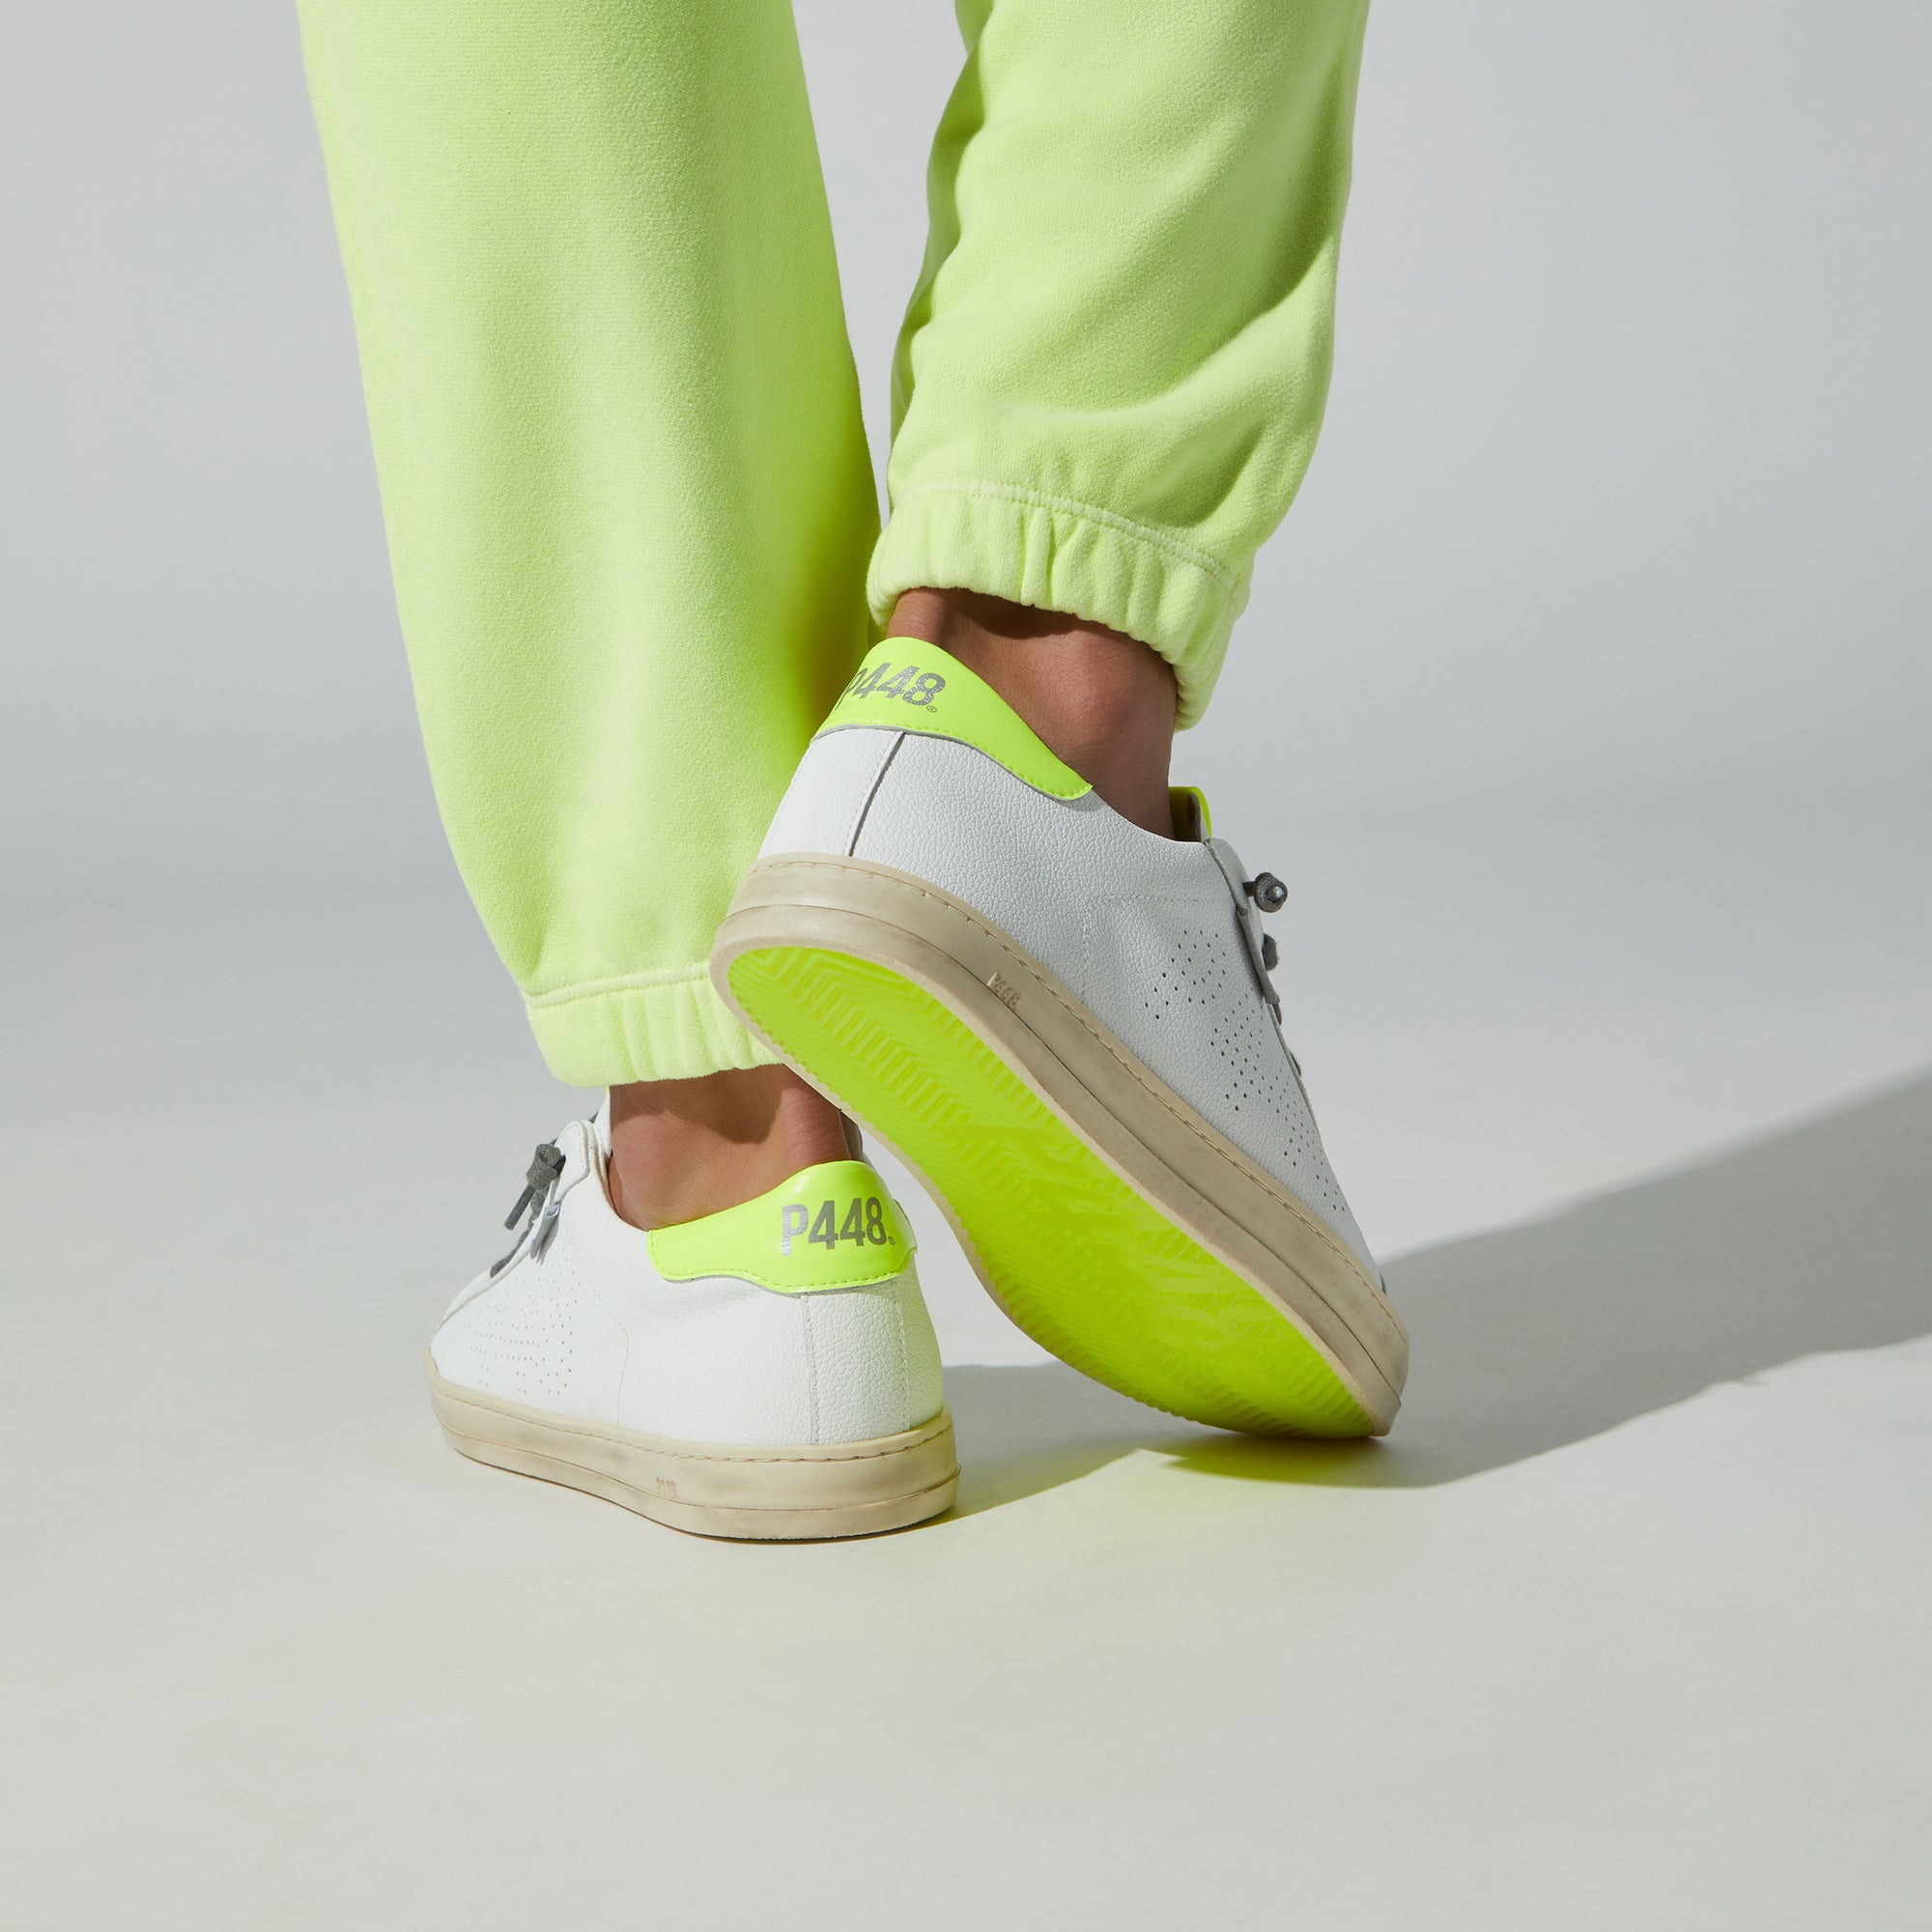 John Recycled White/Yellow Sneaker – P448